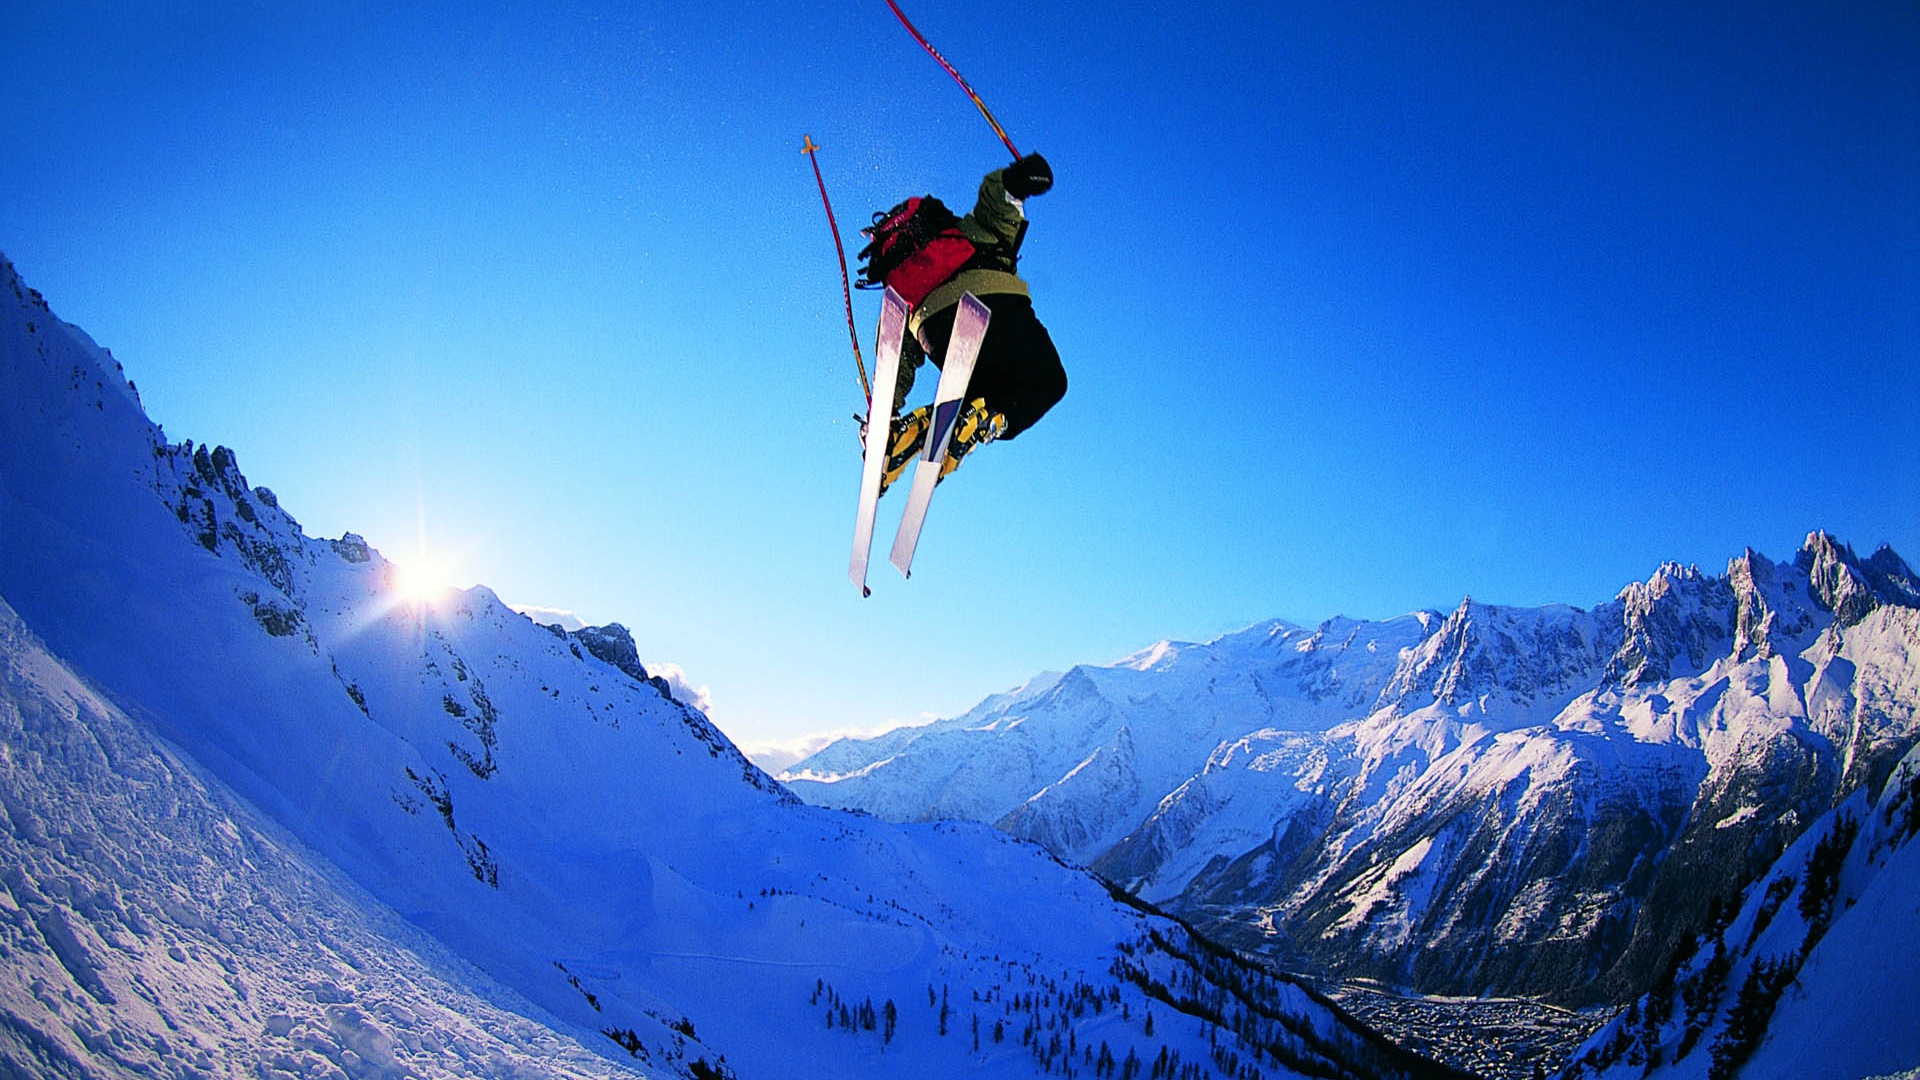 Snow Skiing Desktop Wallpaper HD 1080p Pictures Picture Car